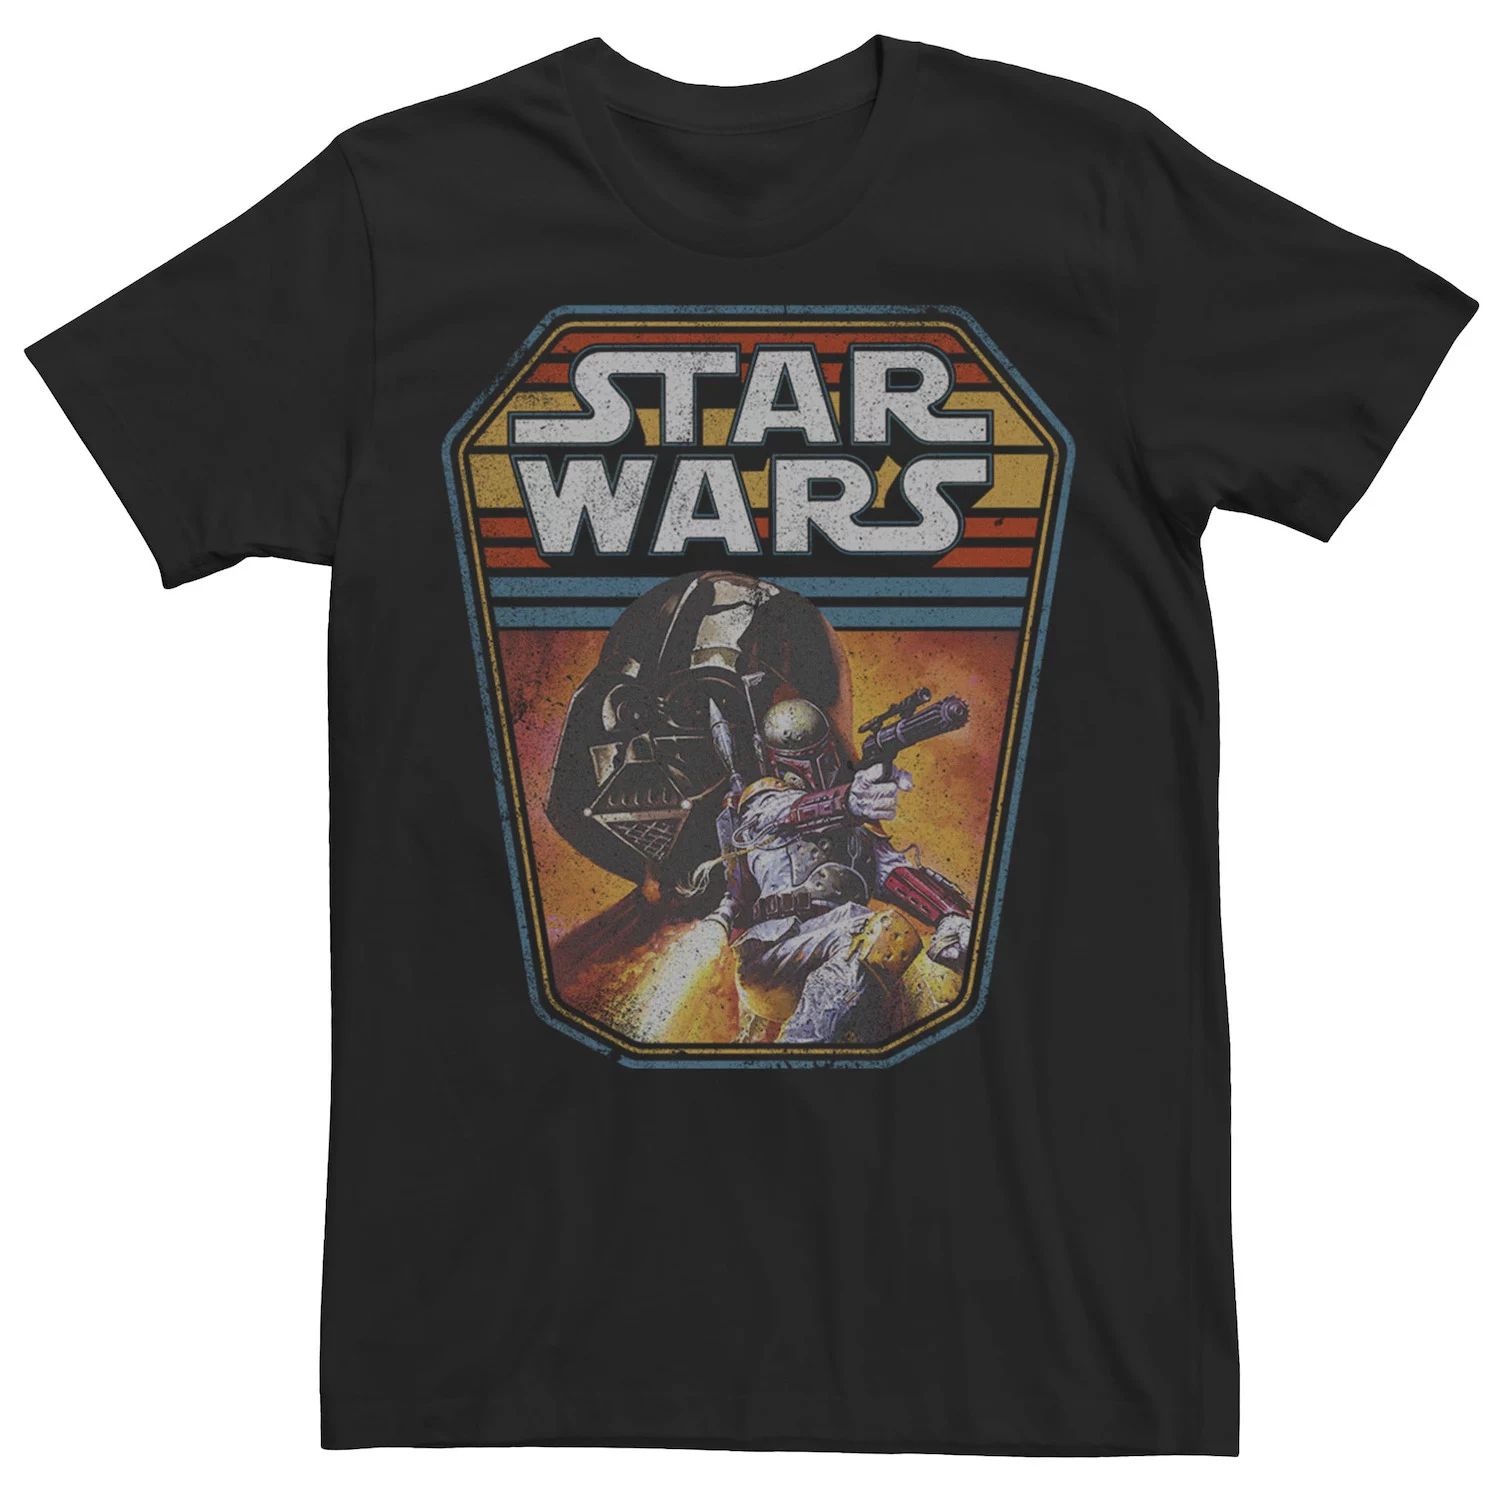 Мужская винтажная футболка с надписью «Звездные войны» в стиле поп-музыки Licensed Character мужская футболка в стиле поп музыки звездные войны мандалорская групповая съемка licensed character